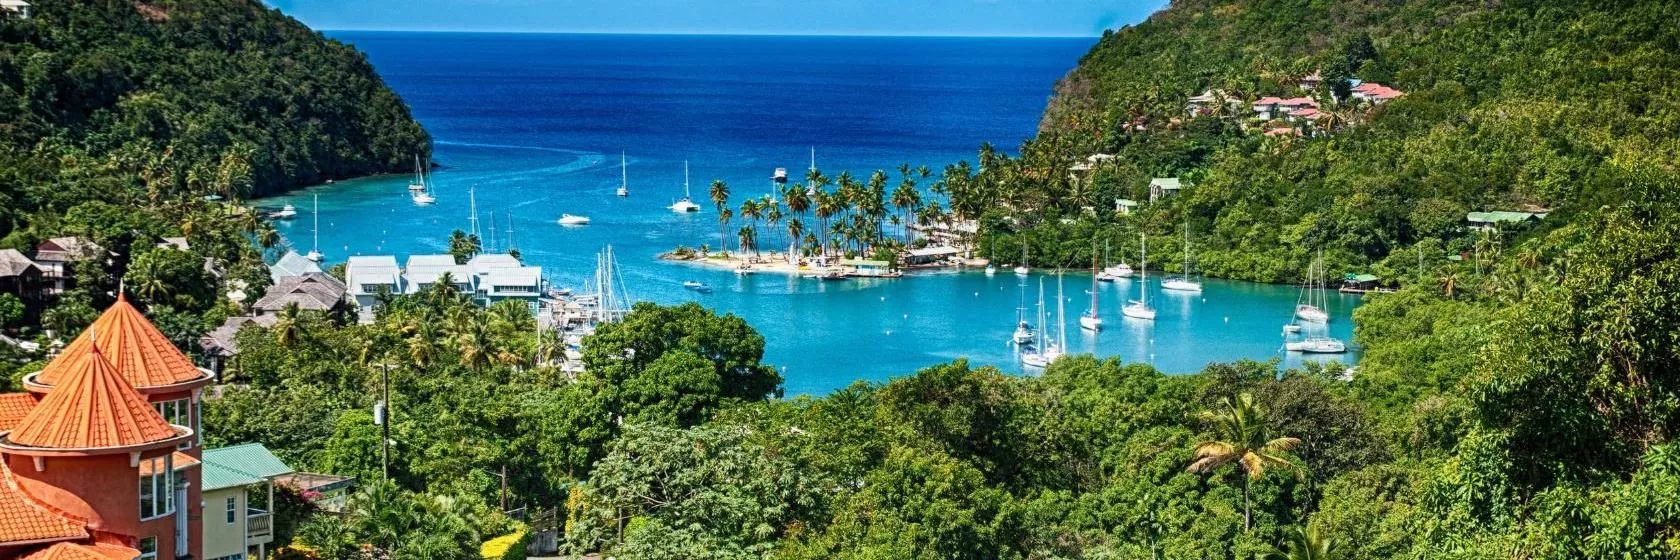 Marigot Bay, St. Lucia Hotels